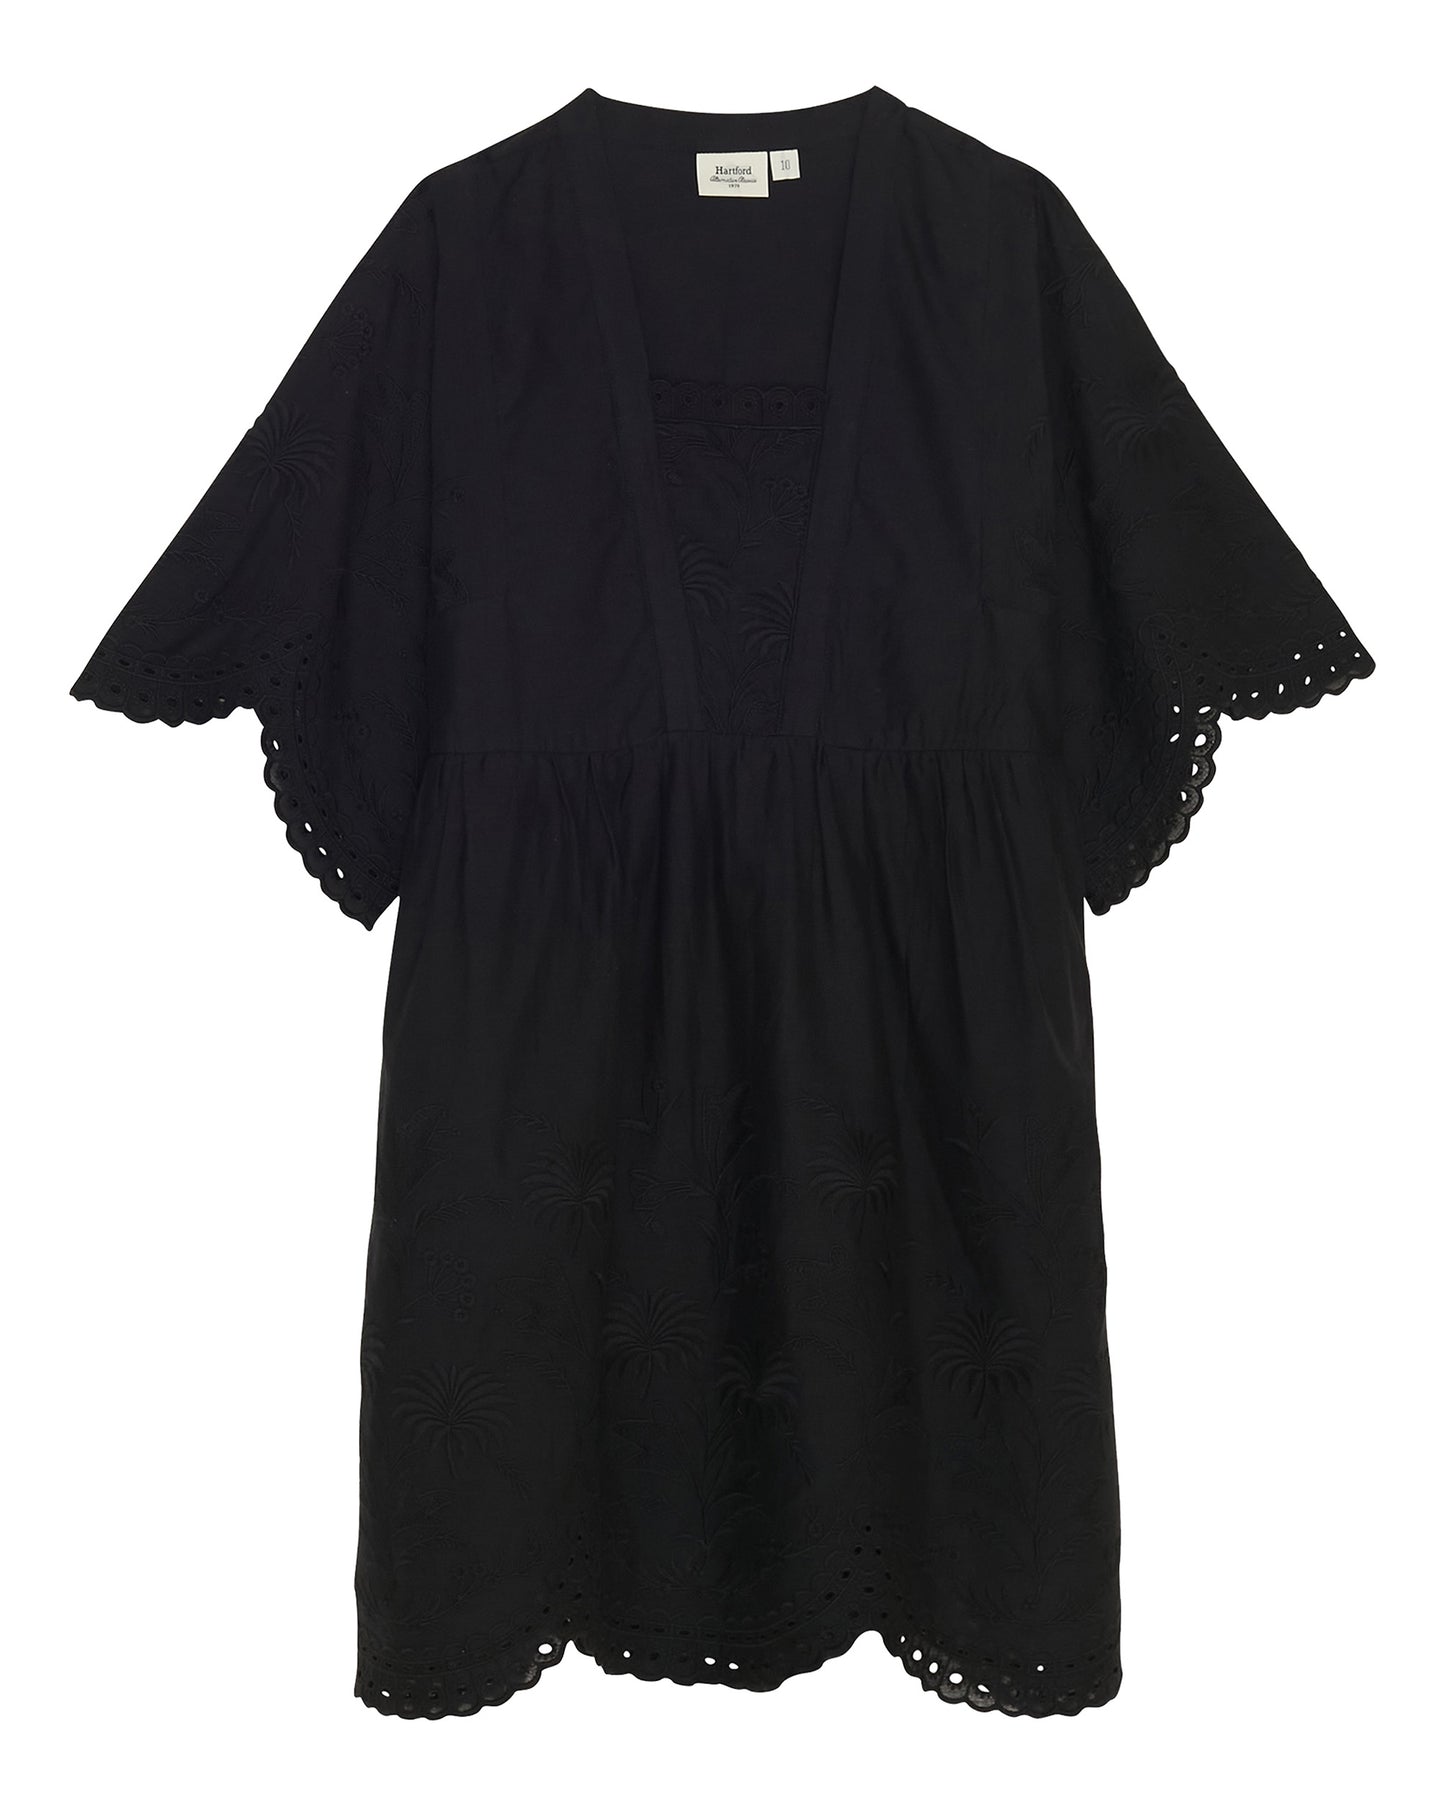 Reggio Girls' Embroidered Black Cotton Voile Dress